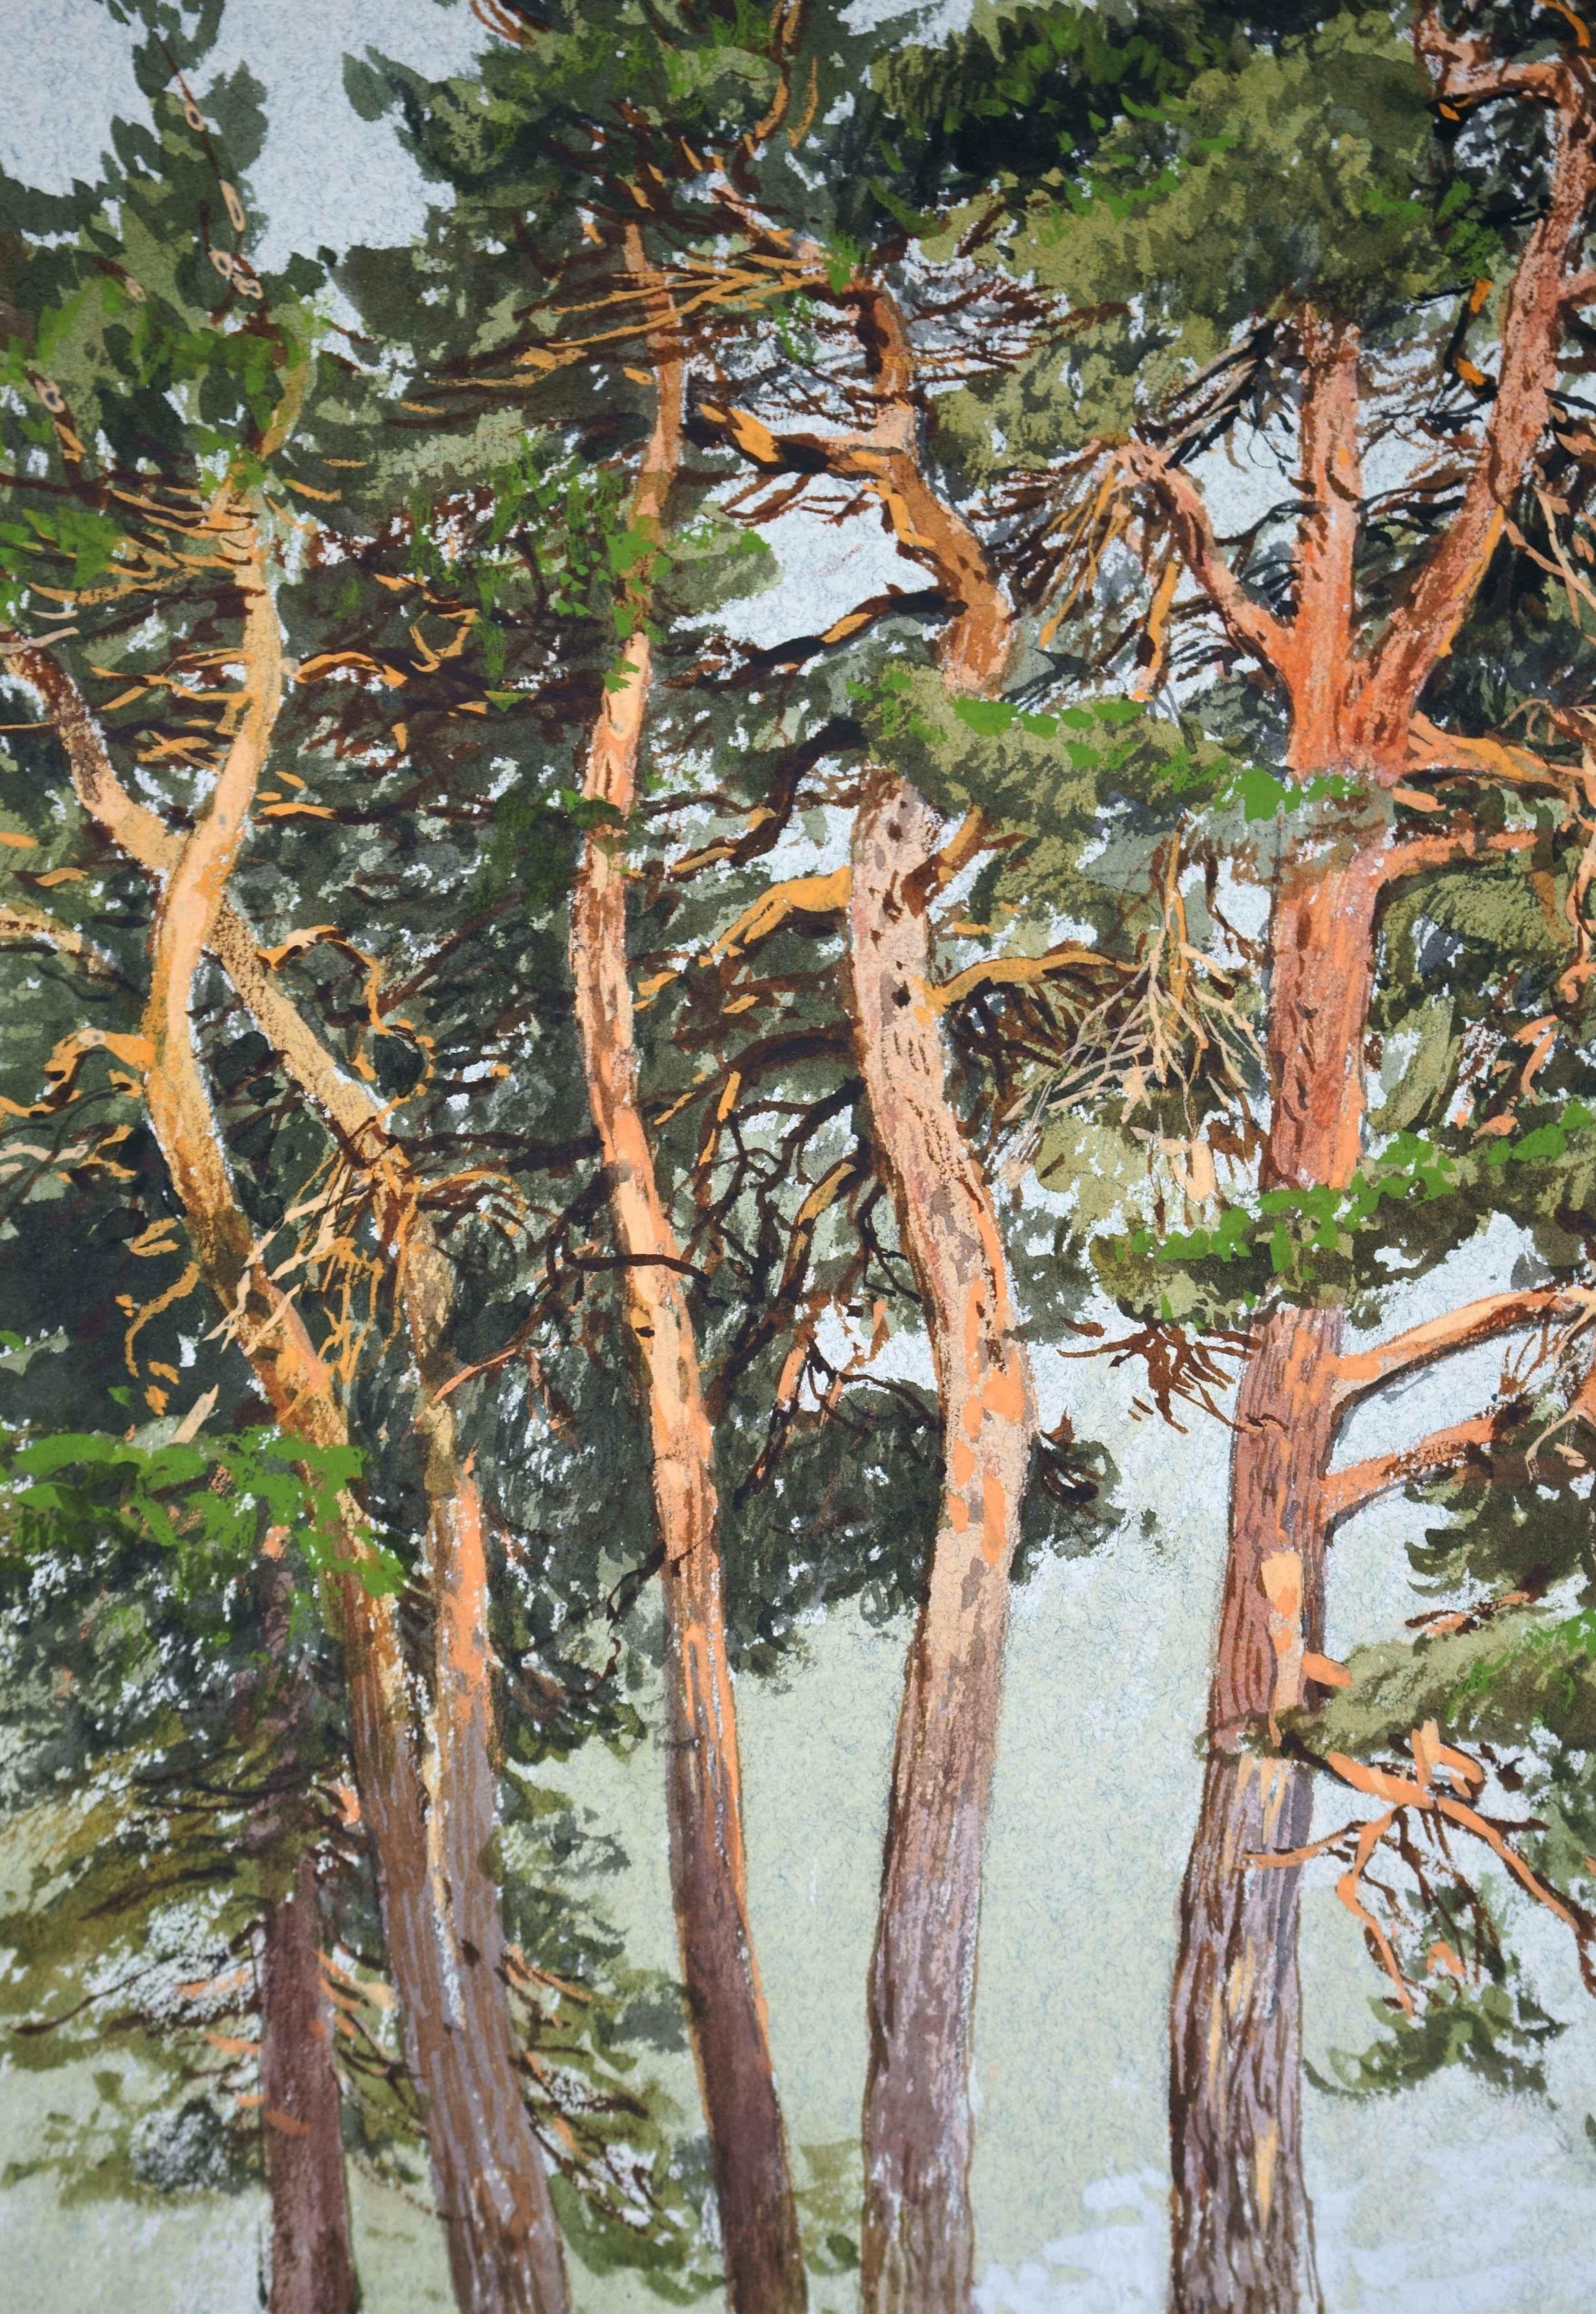 Norwegian Pine Grove - The inner glow of the trees - - Art by Themistokles von Eckenbrecher